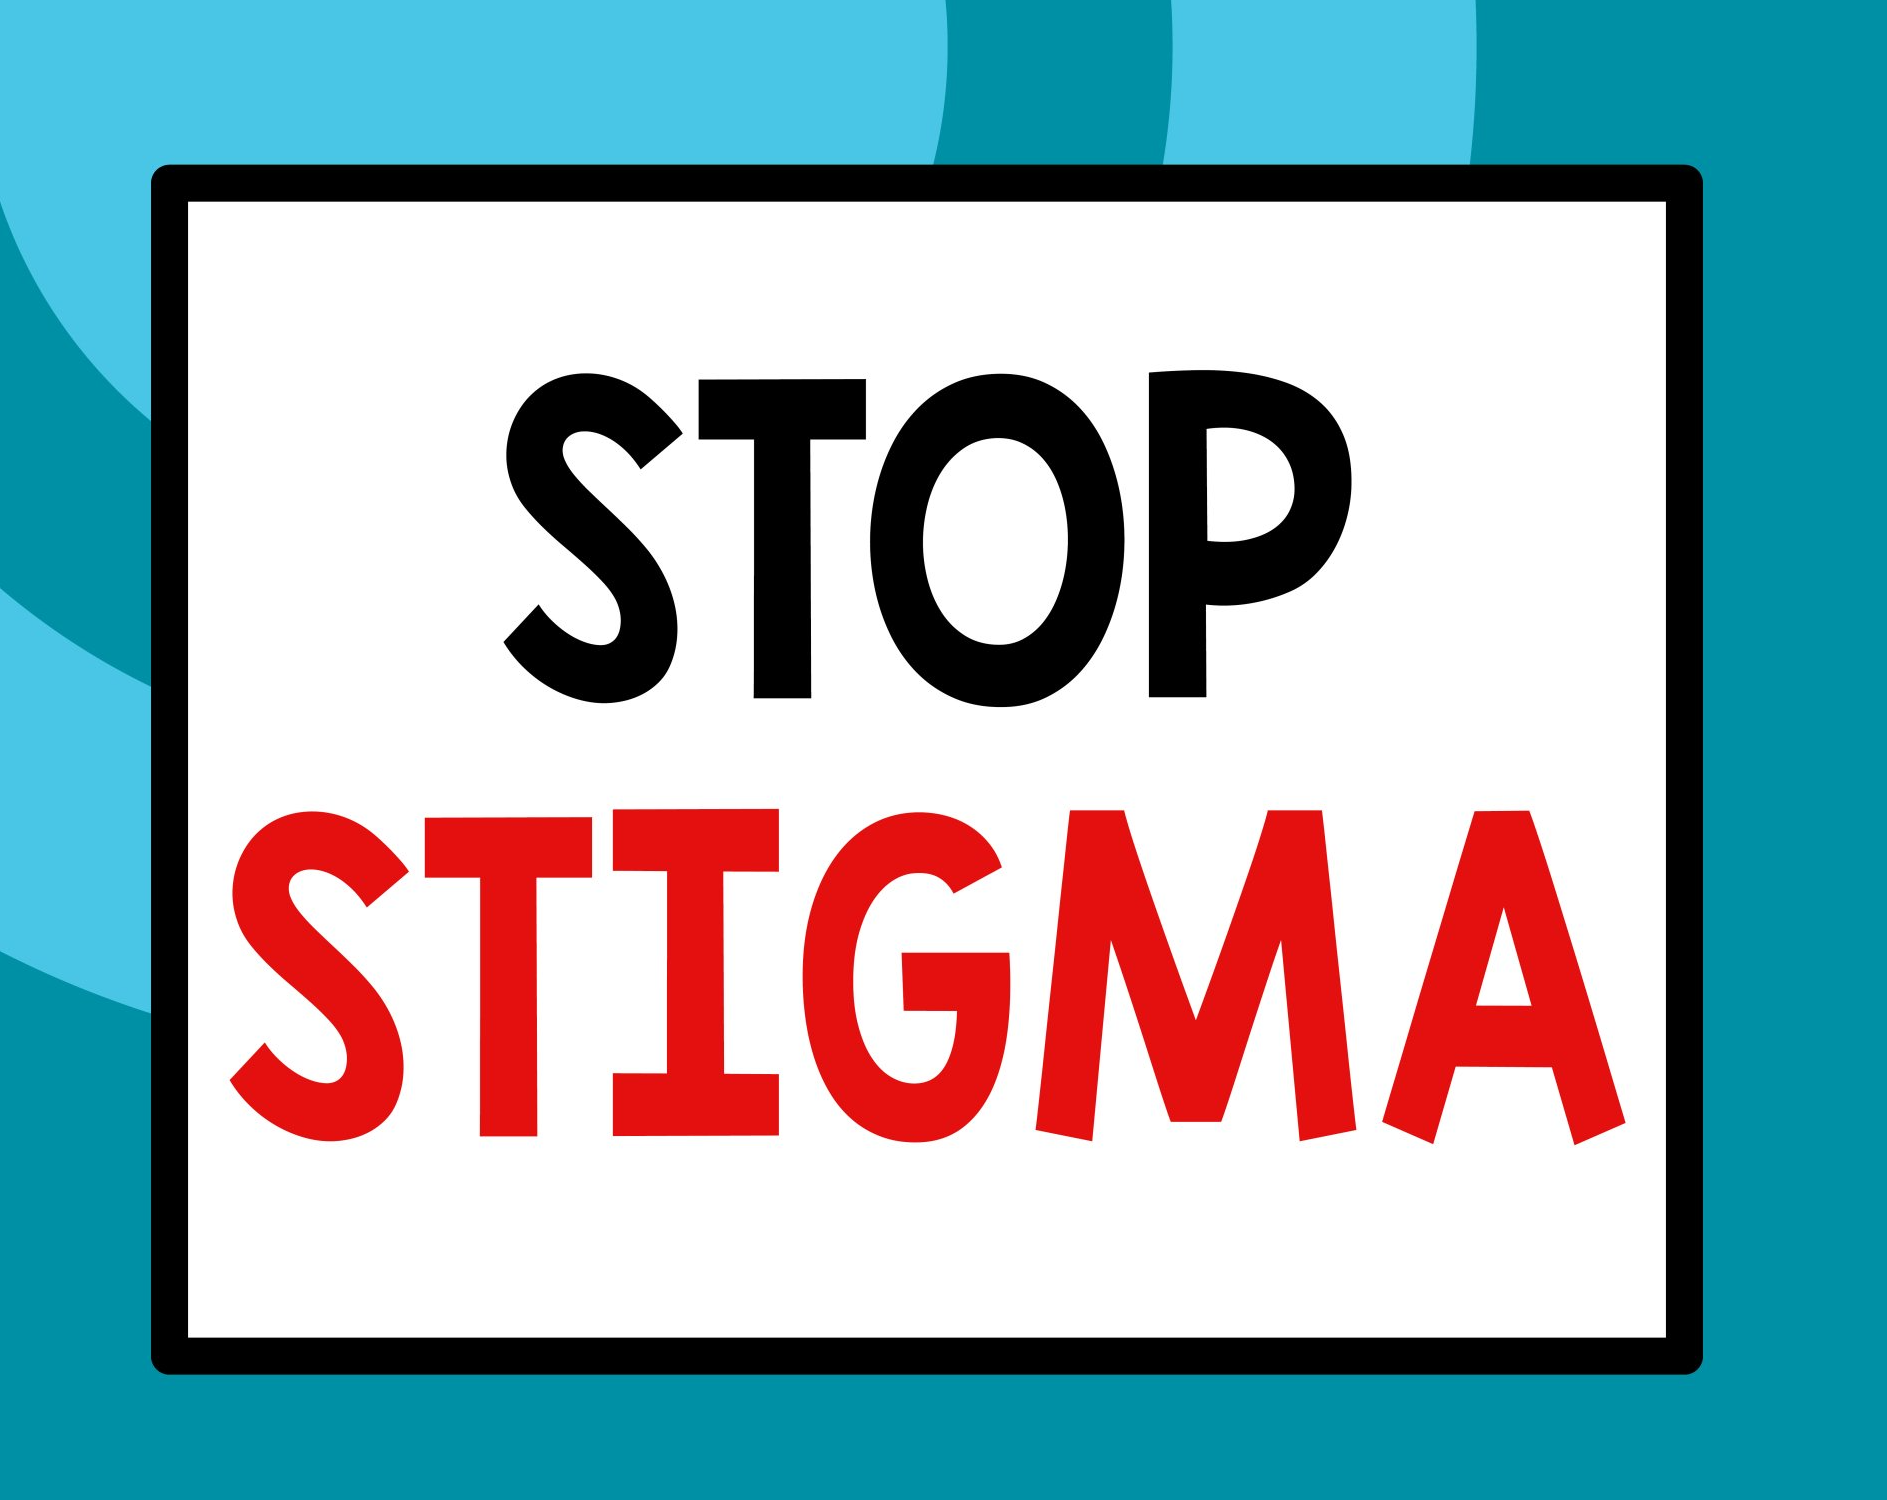 STOP STIGMA sign